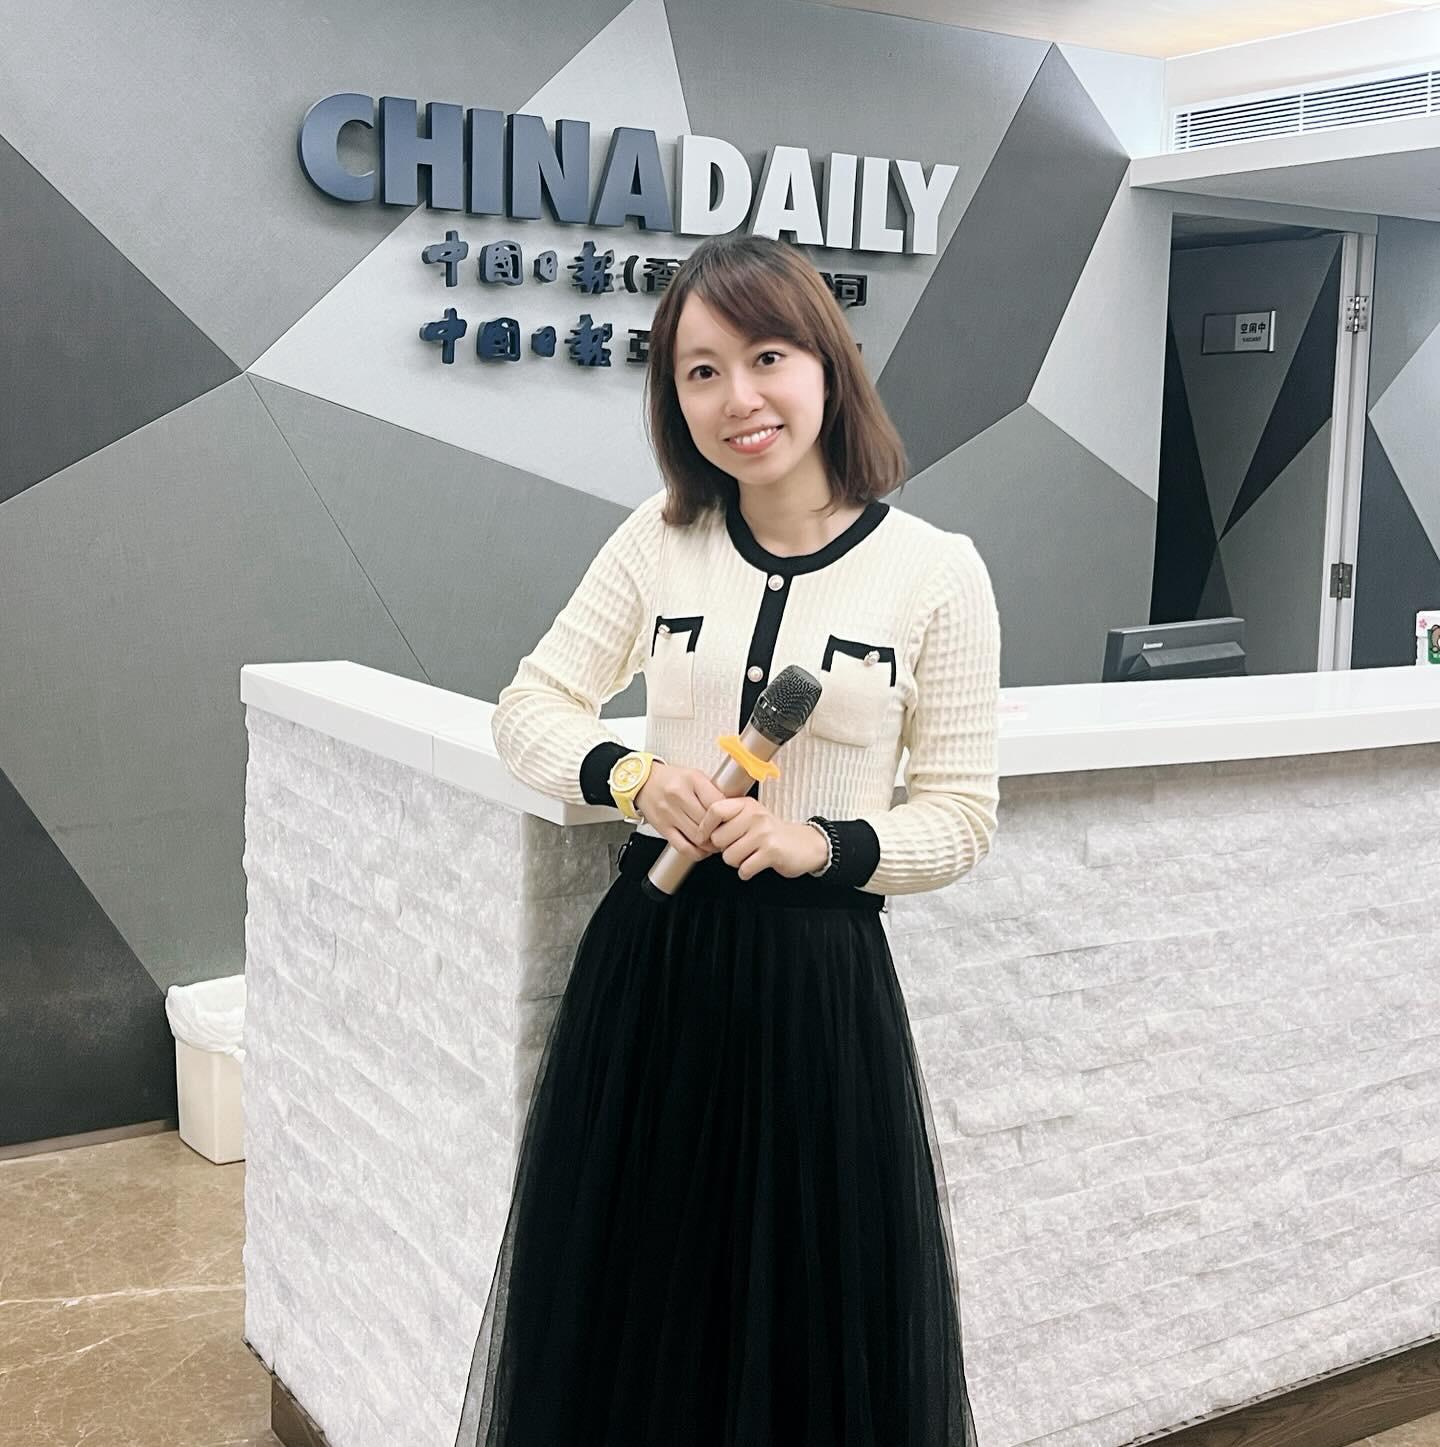 VIVIAN 曾子晴之司儀主持紀錄: China Daily 交流團口才與新媒體分享嘉賓